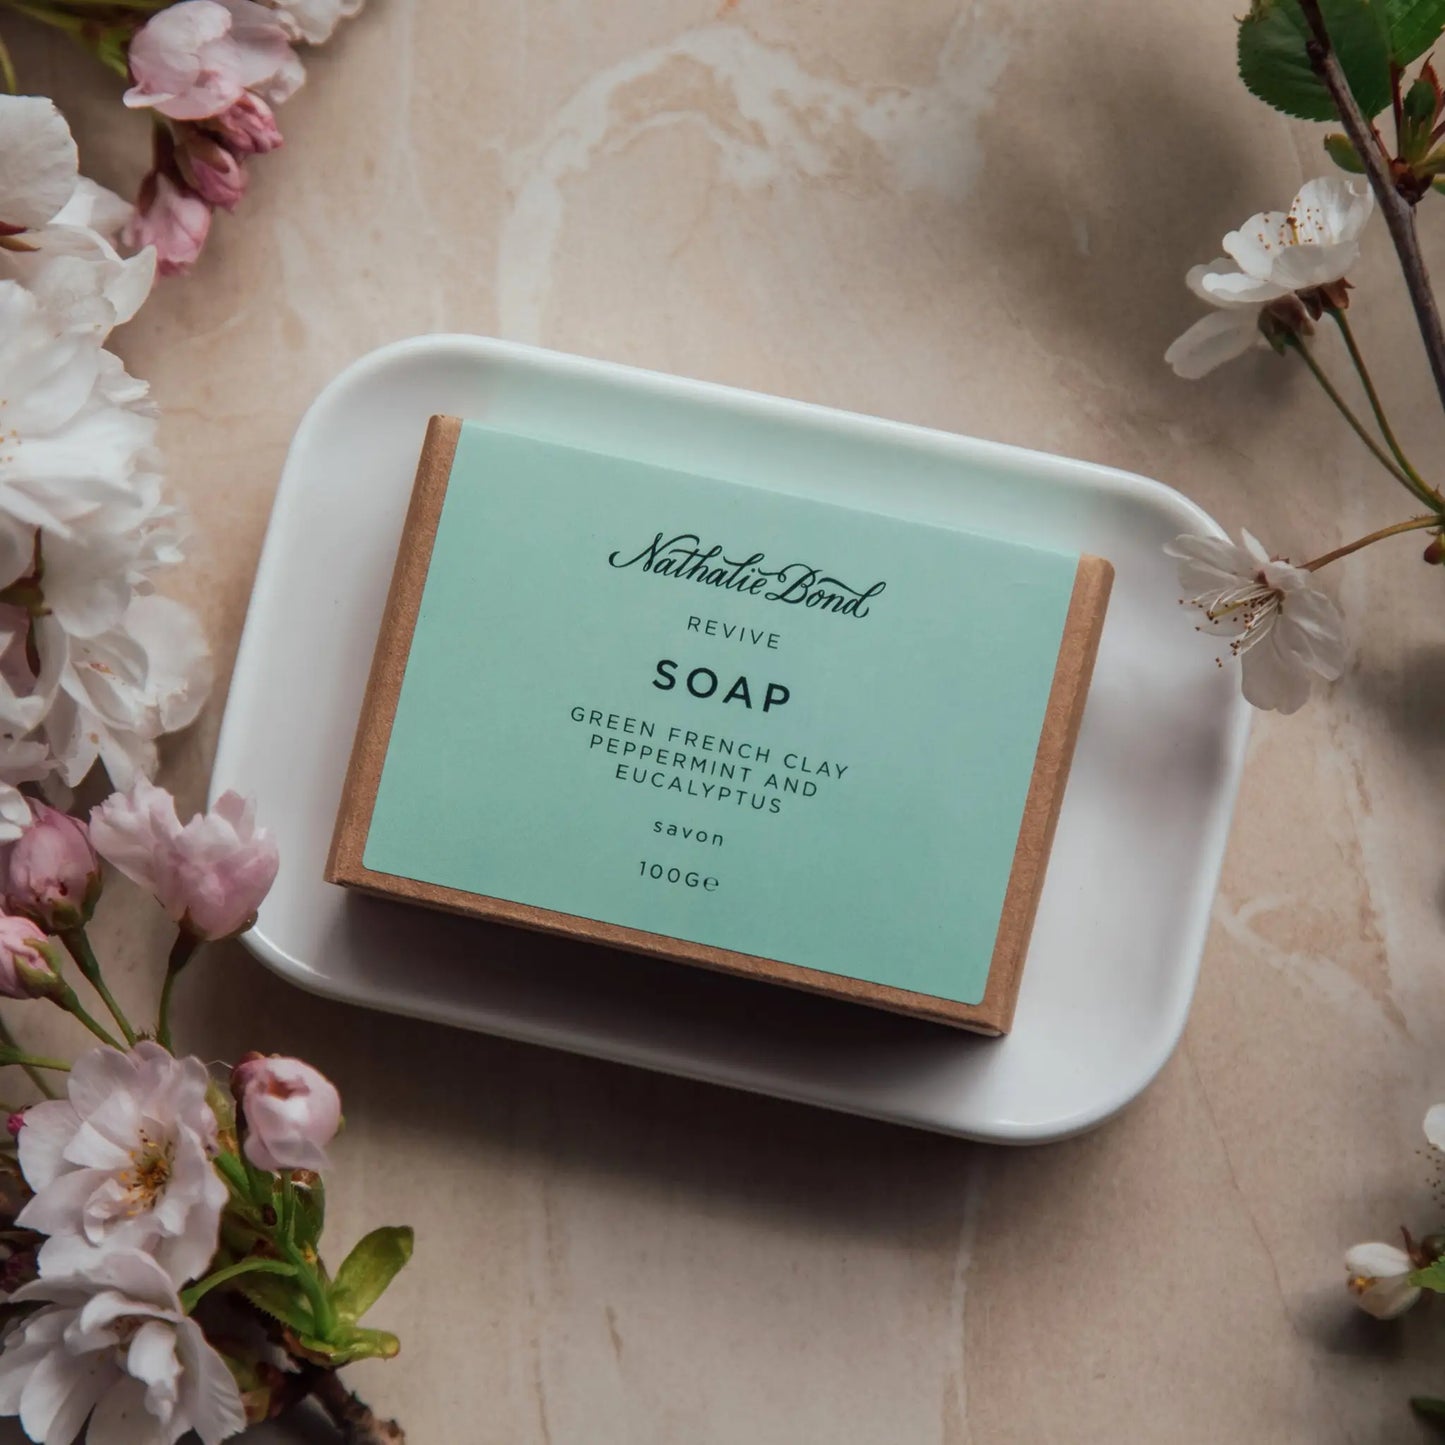 Nathalie Bond Revive Soap Bar. Packed with gentle organic vegan ingredients